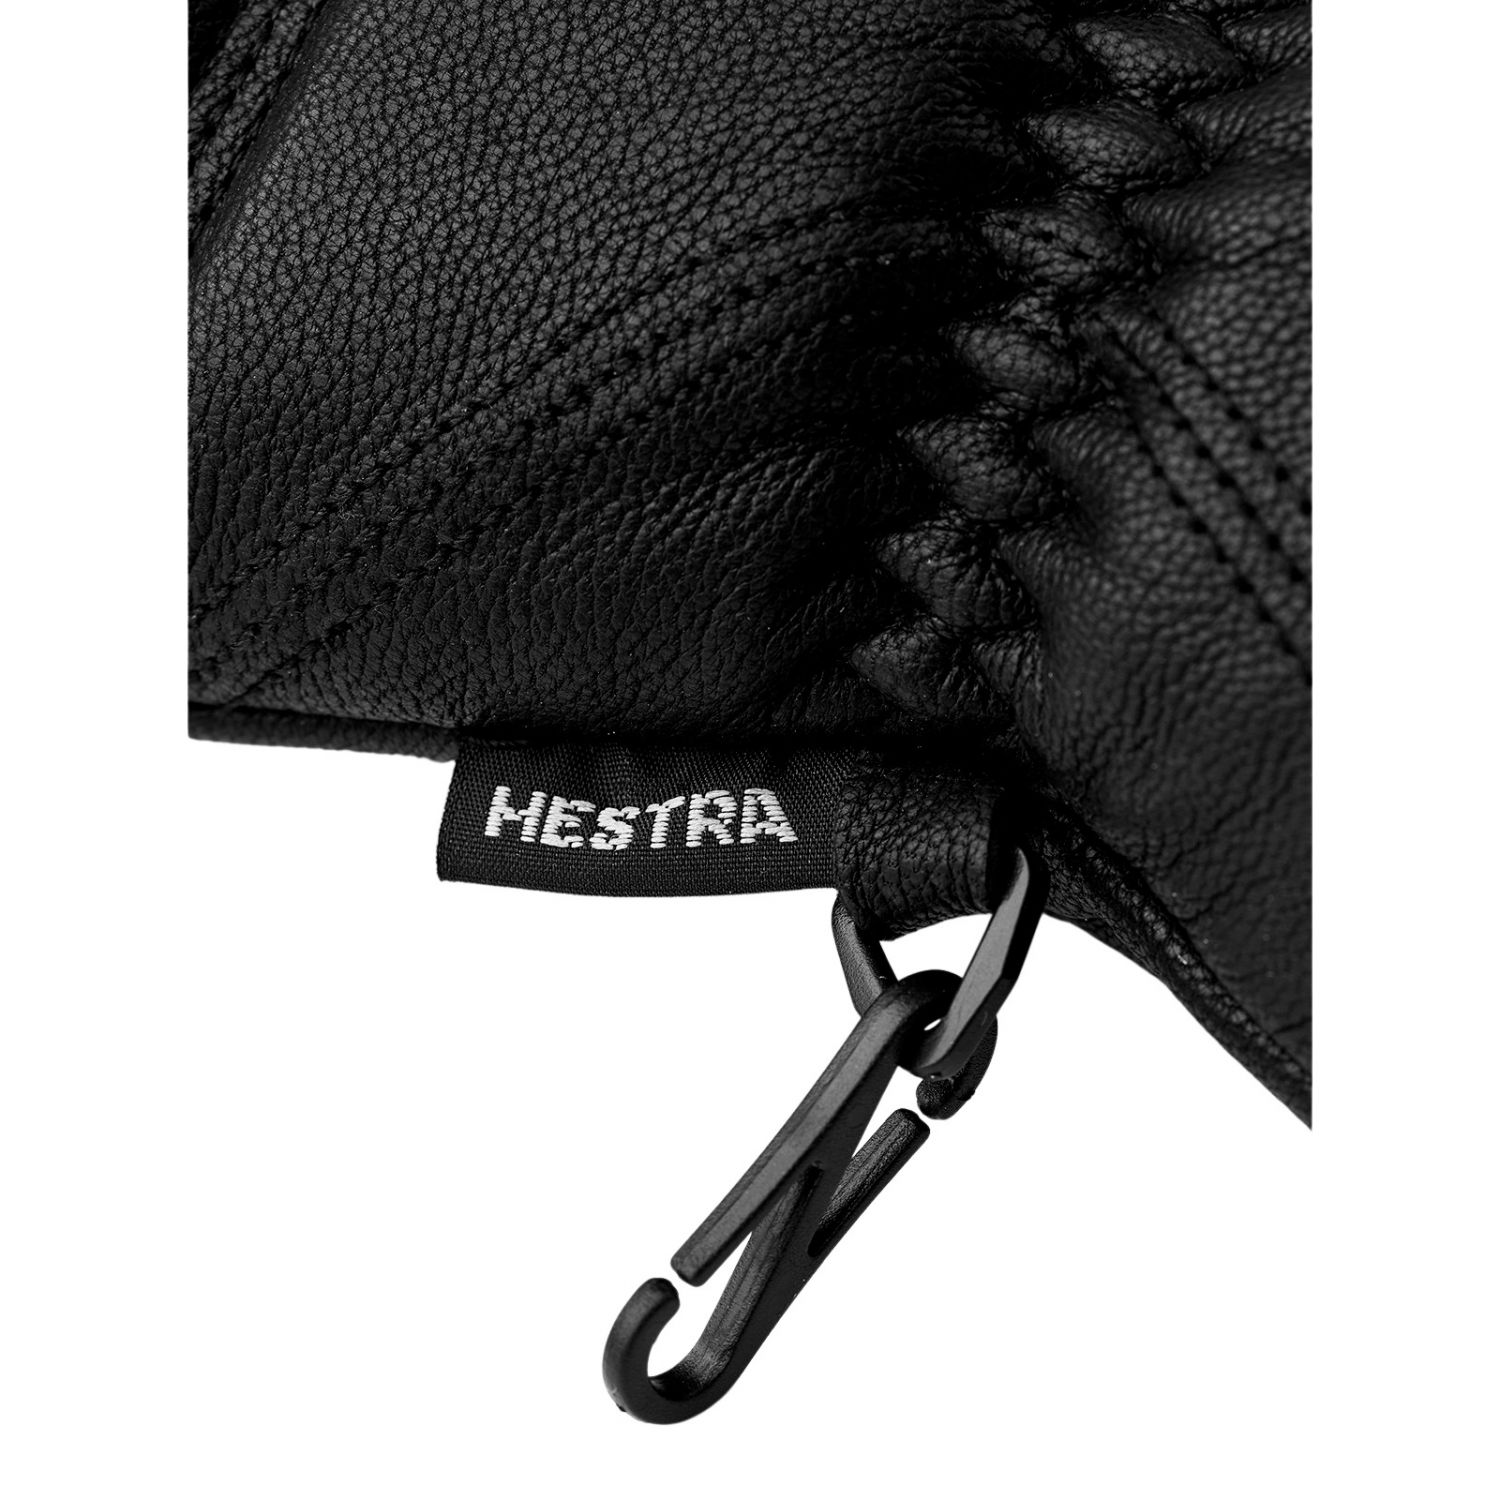 Hestra Leather Box mitt, black